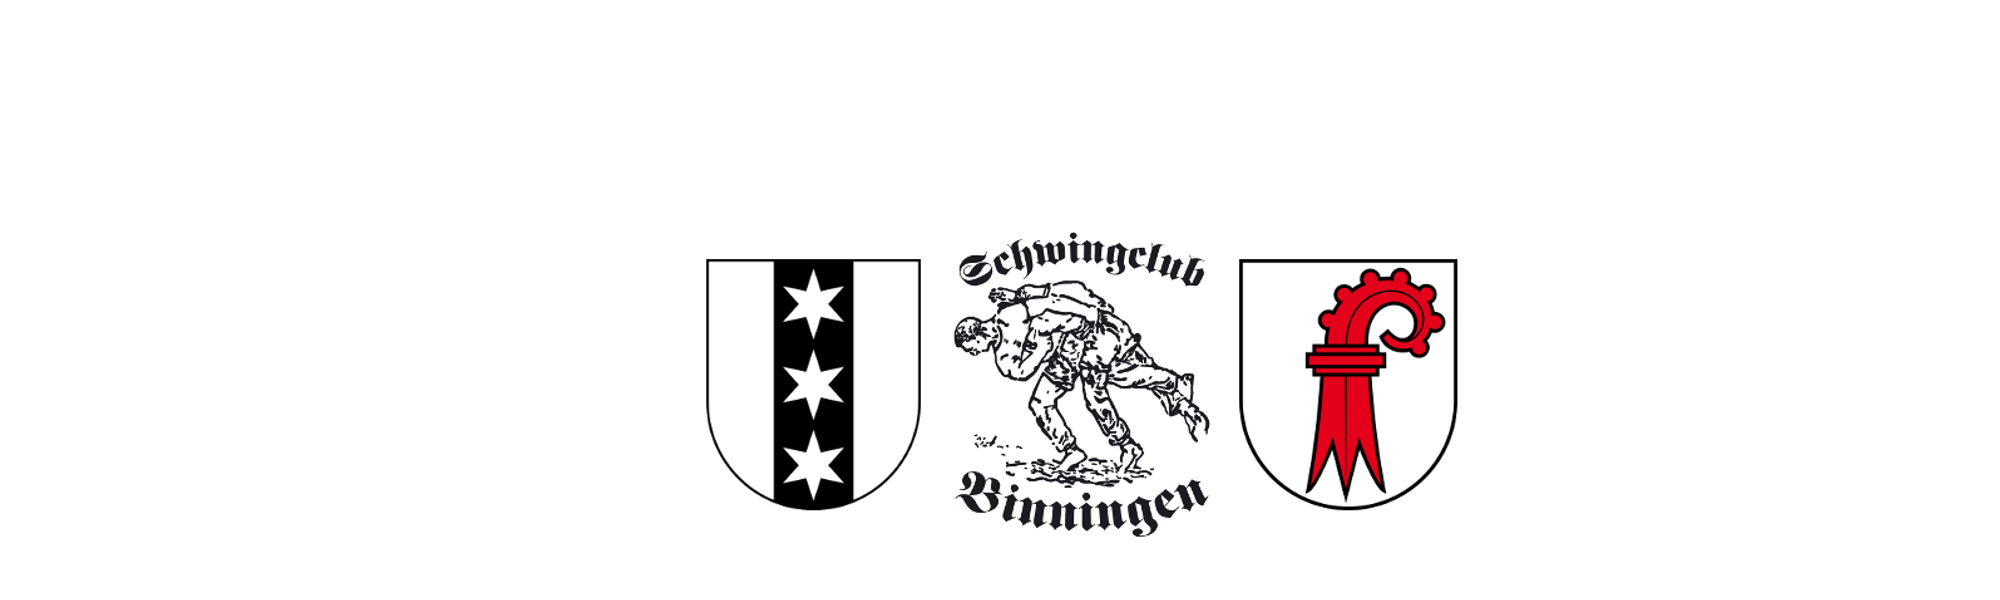 (c) Schwingclubbinningen.ch